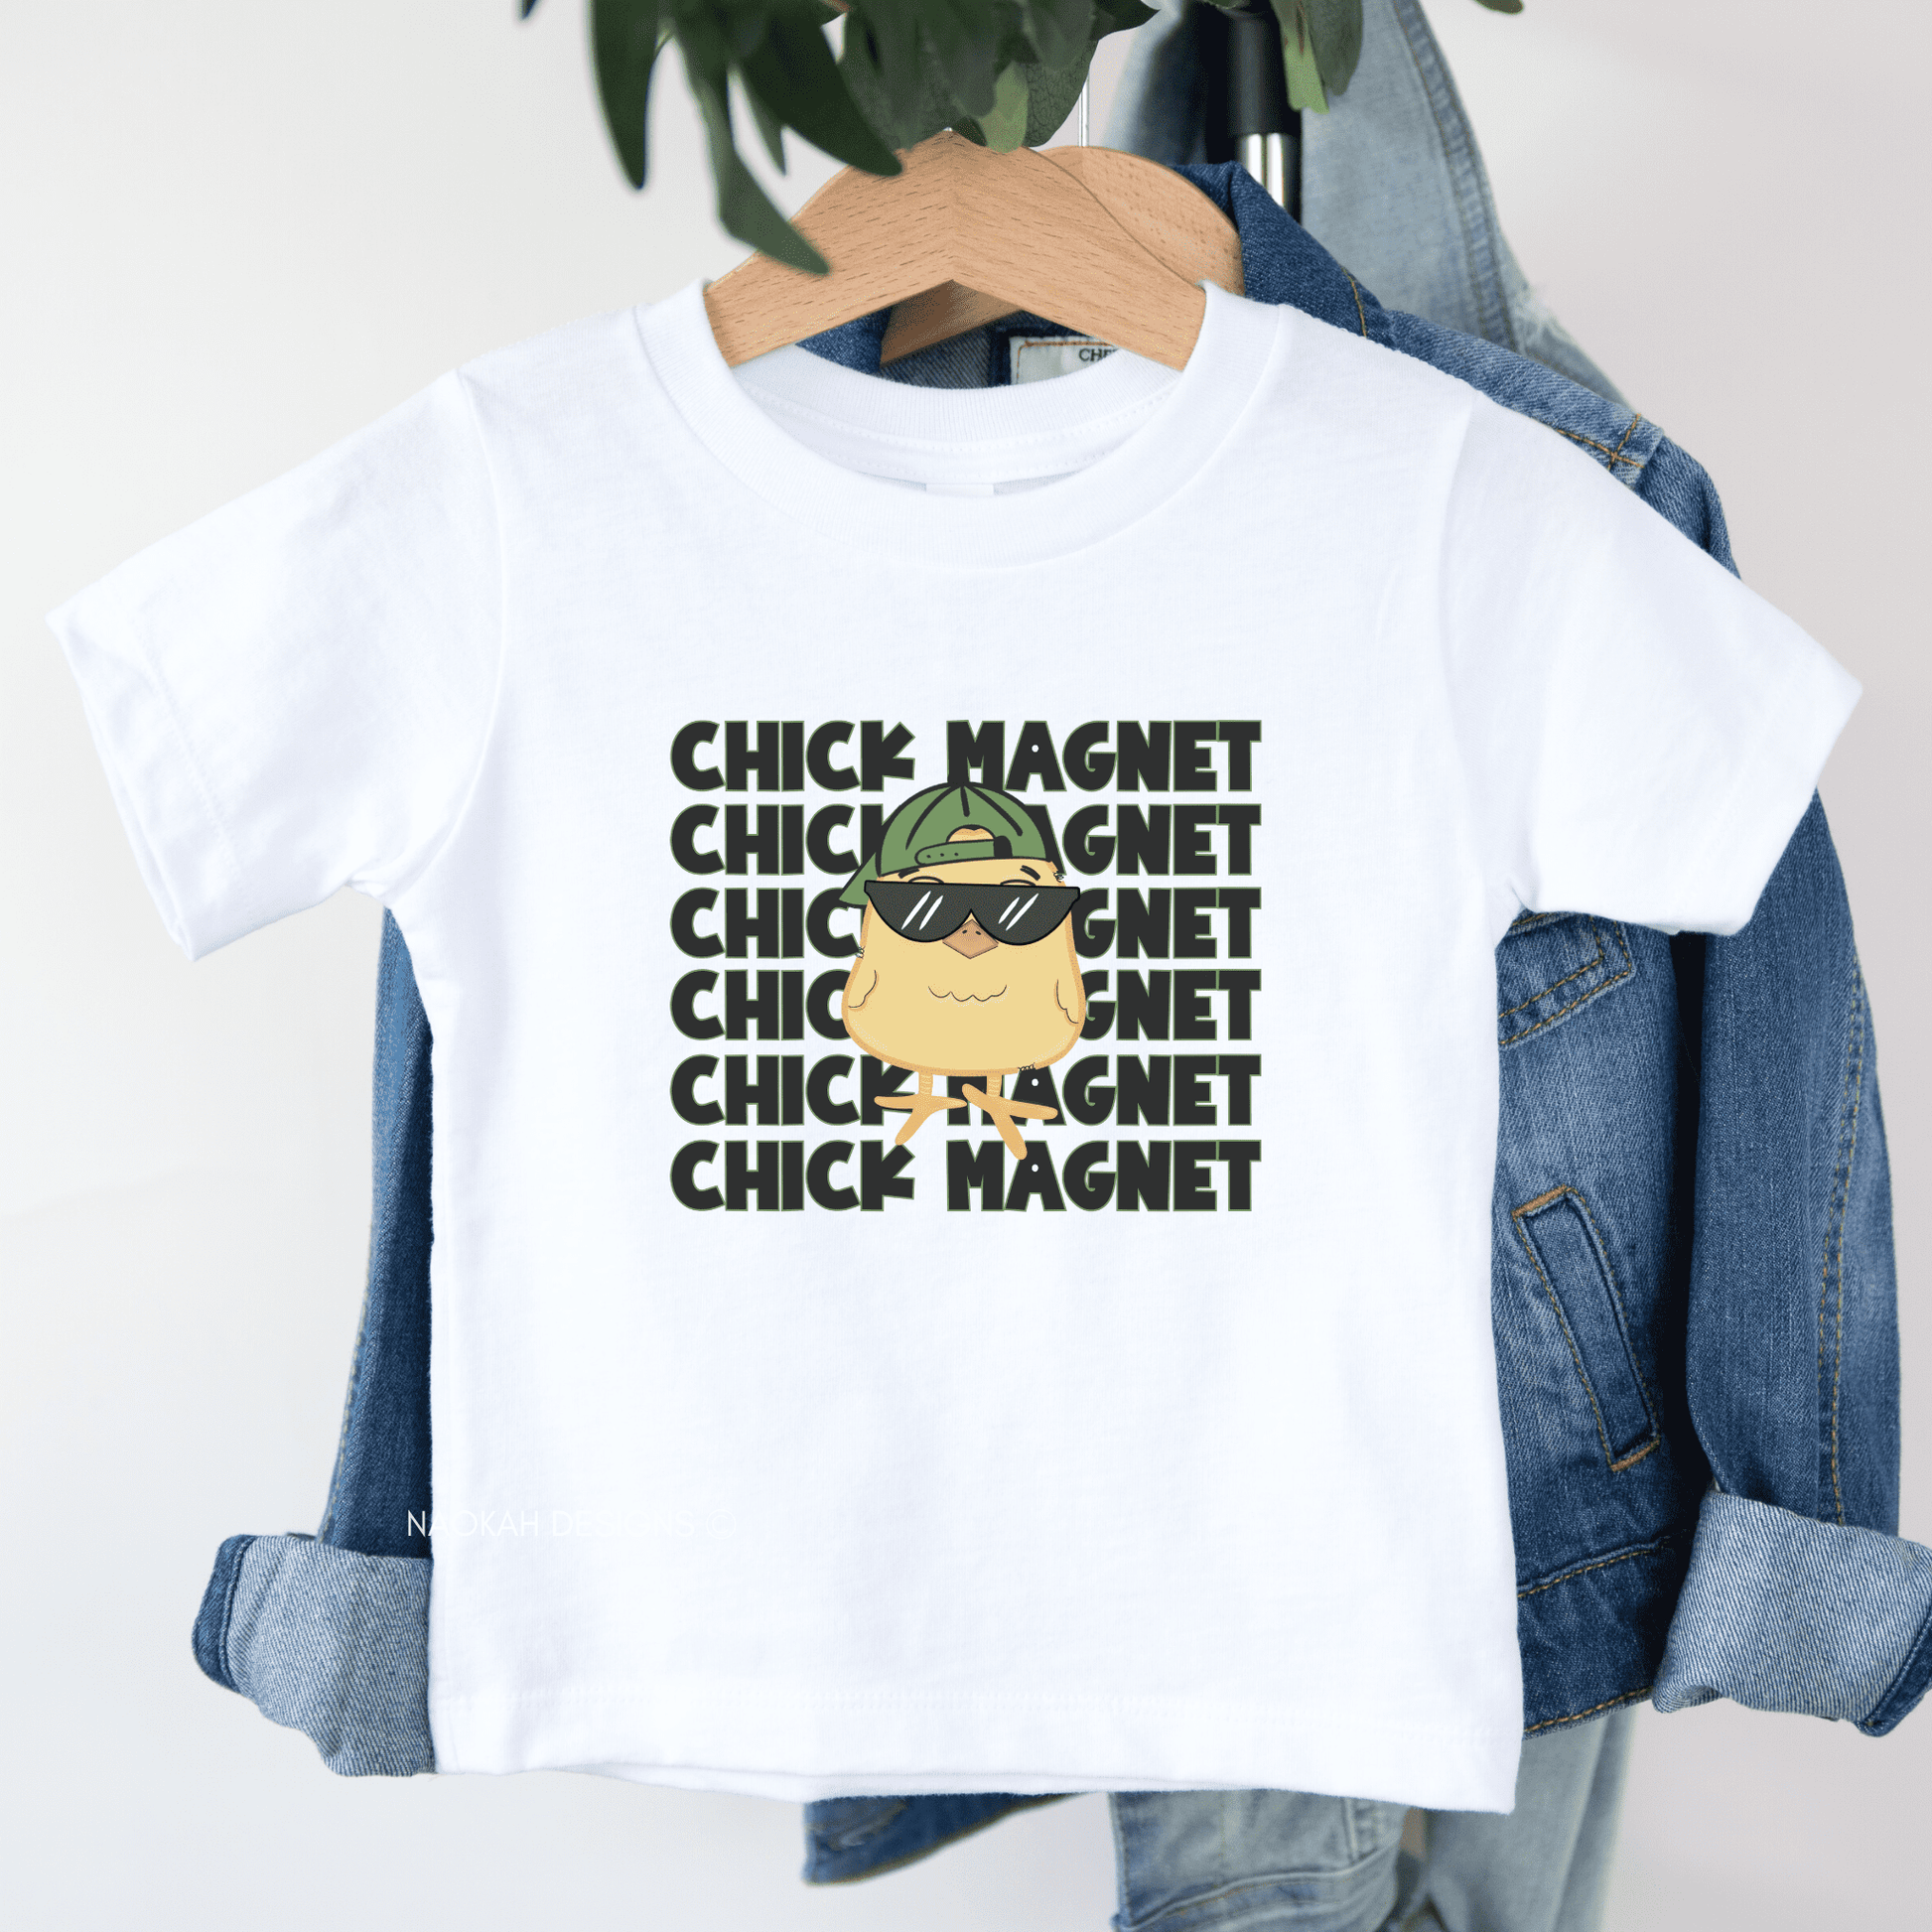 Chick Magnet Shirt, Child's Easter Shirt, Kids Easter Bunny Shirt, Youth Easter Chick Shirt, Easter Toddler Bunny Shirt